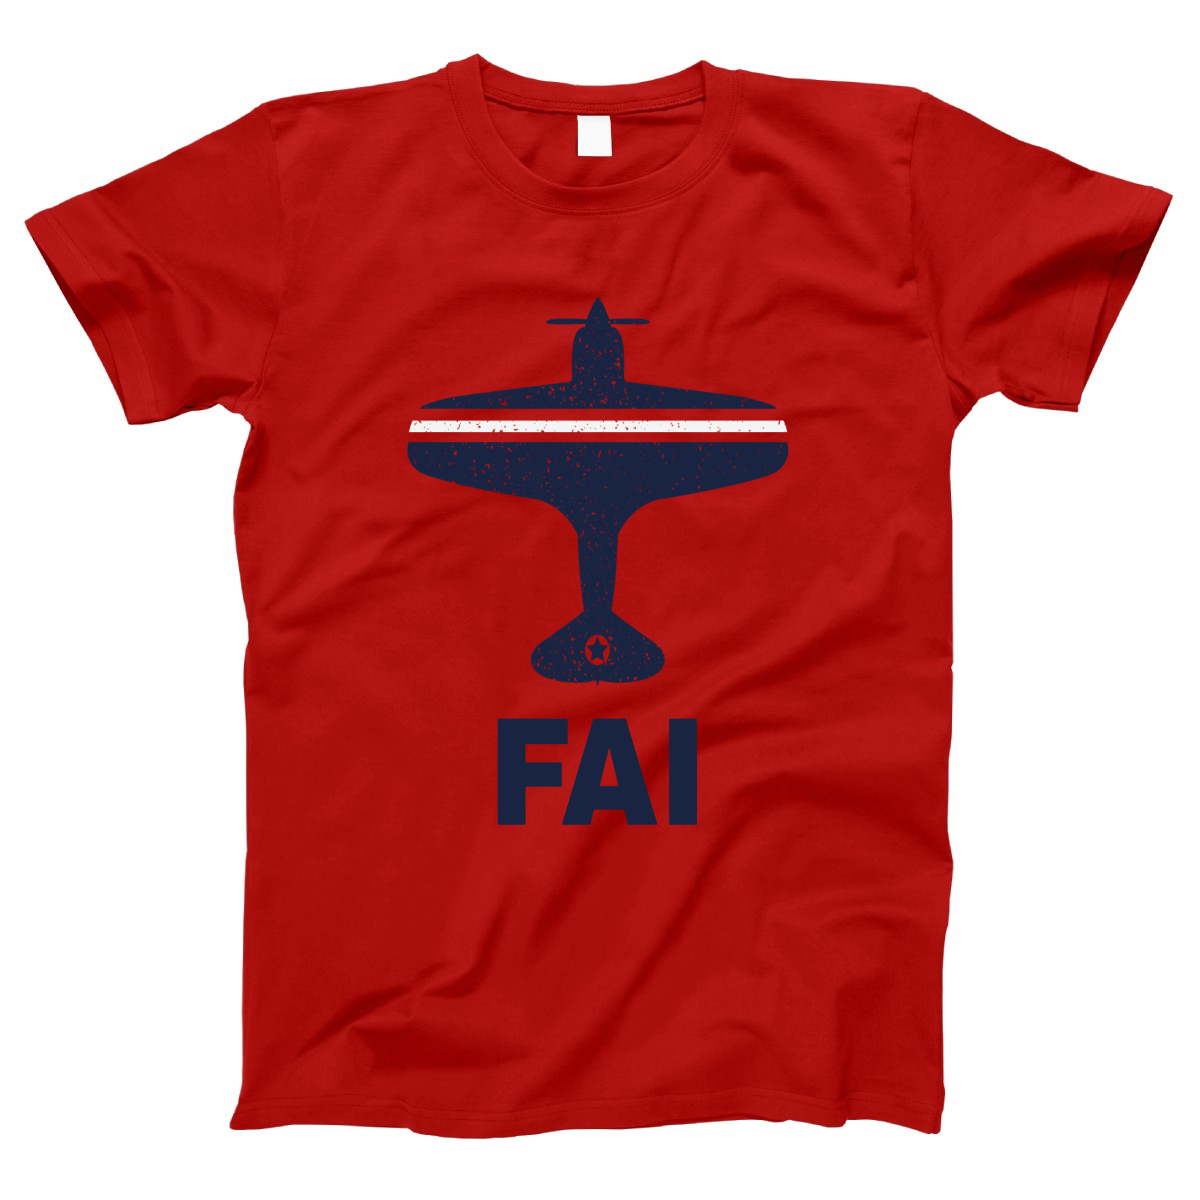 Fly Fairbanks FAI Airport Women's T-shirt | Red